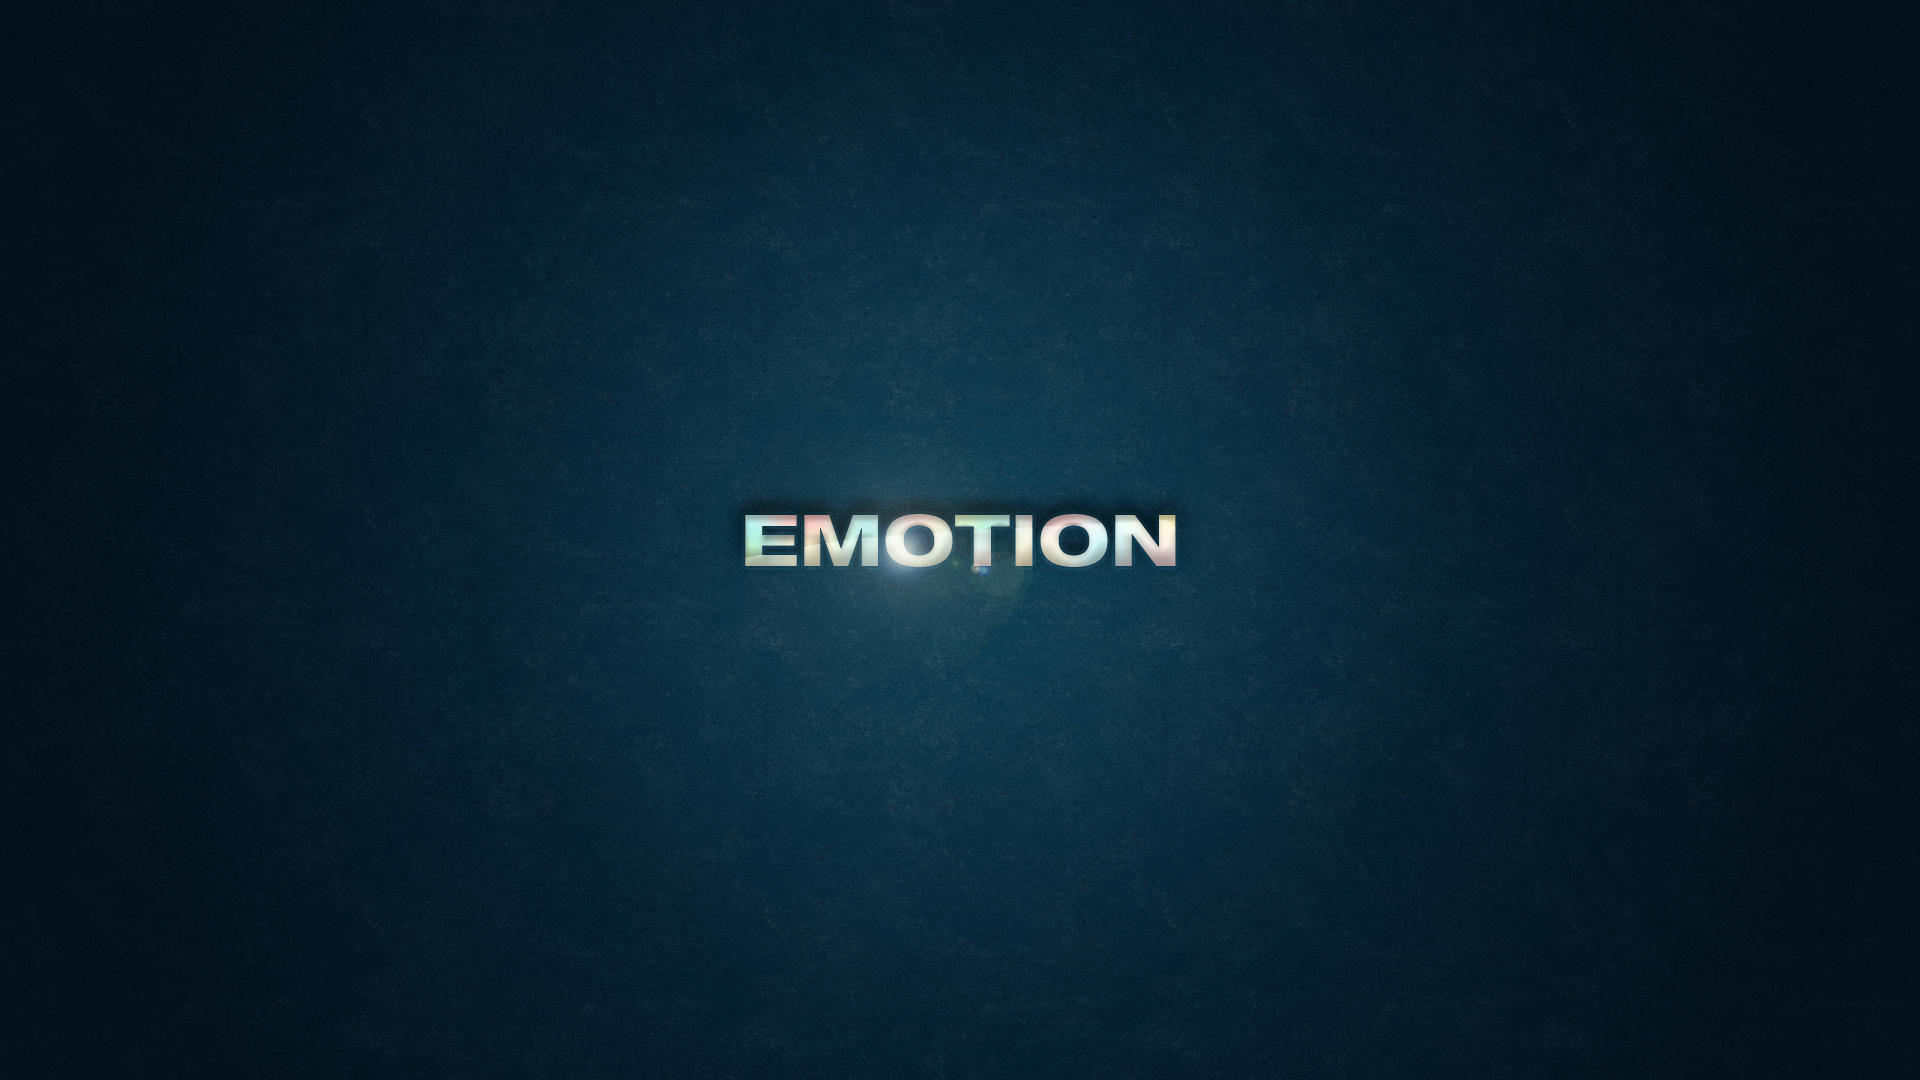 Meaning: Emotion by meeyuz on deviantART